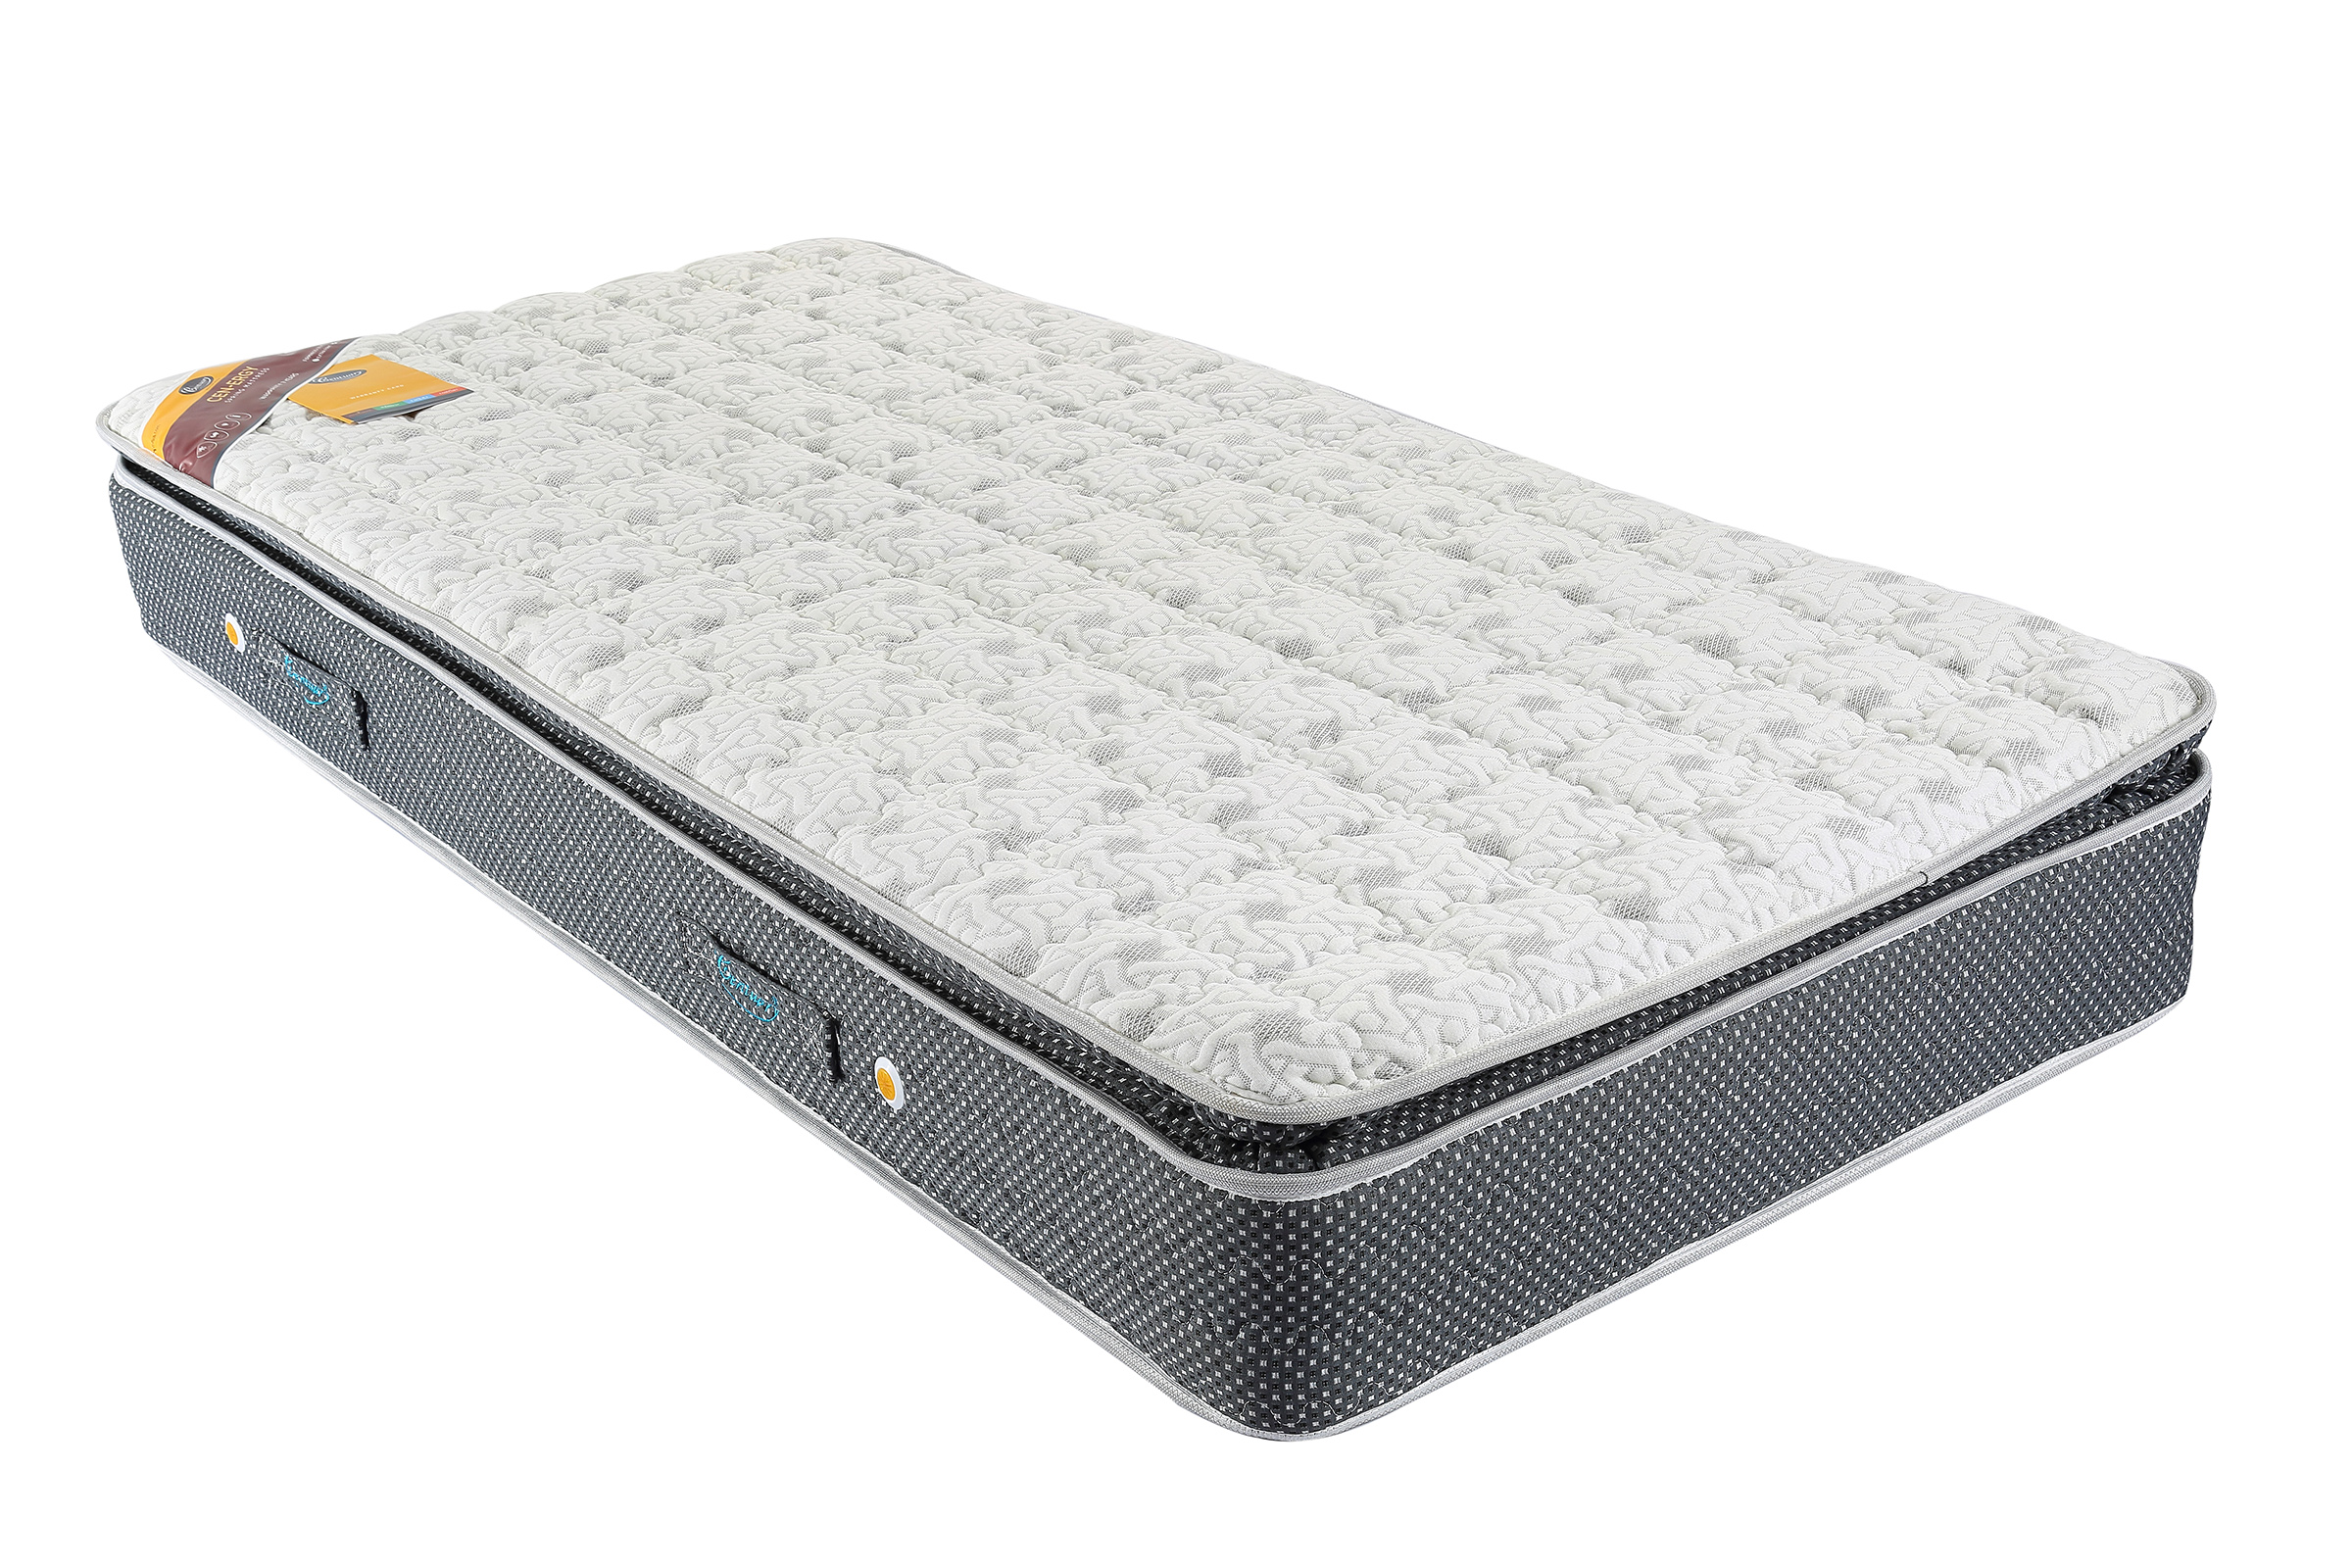 centuary enigma mattress 8 inch